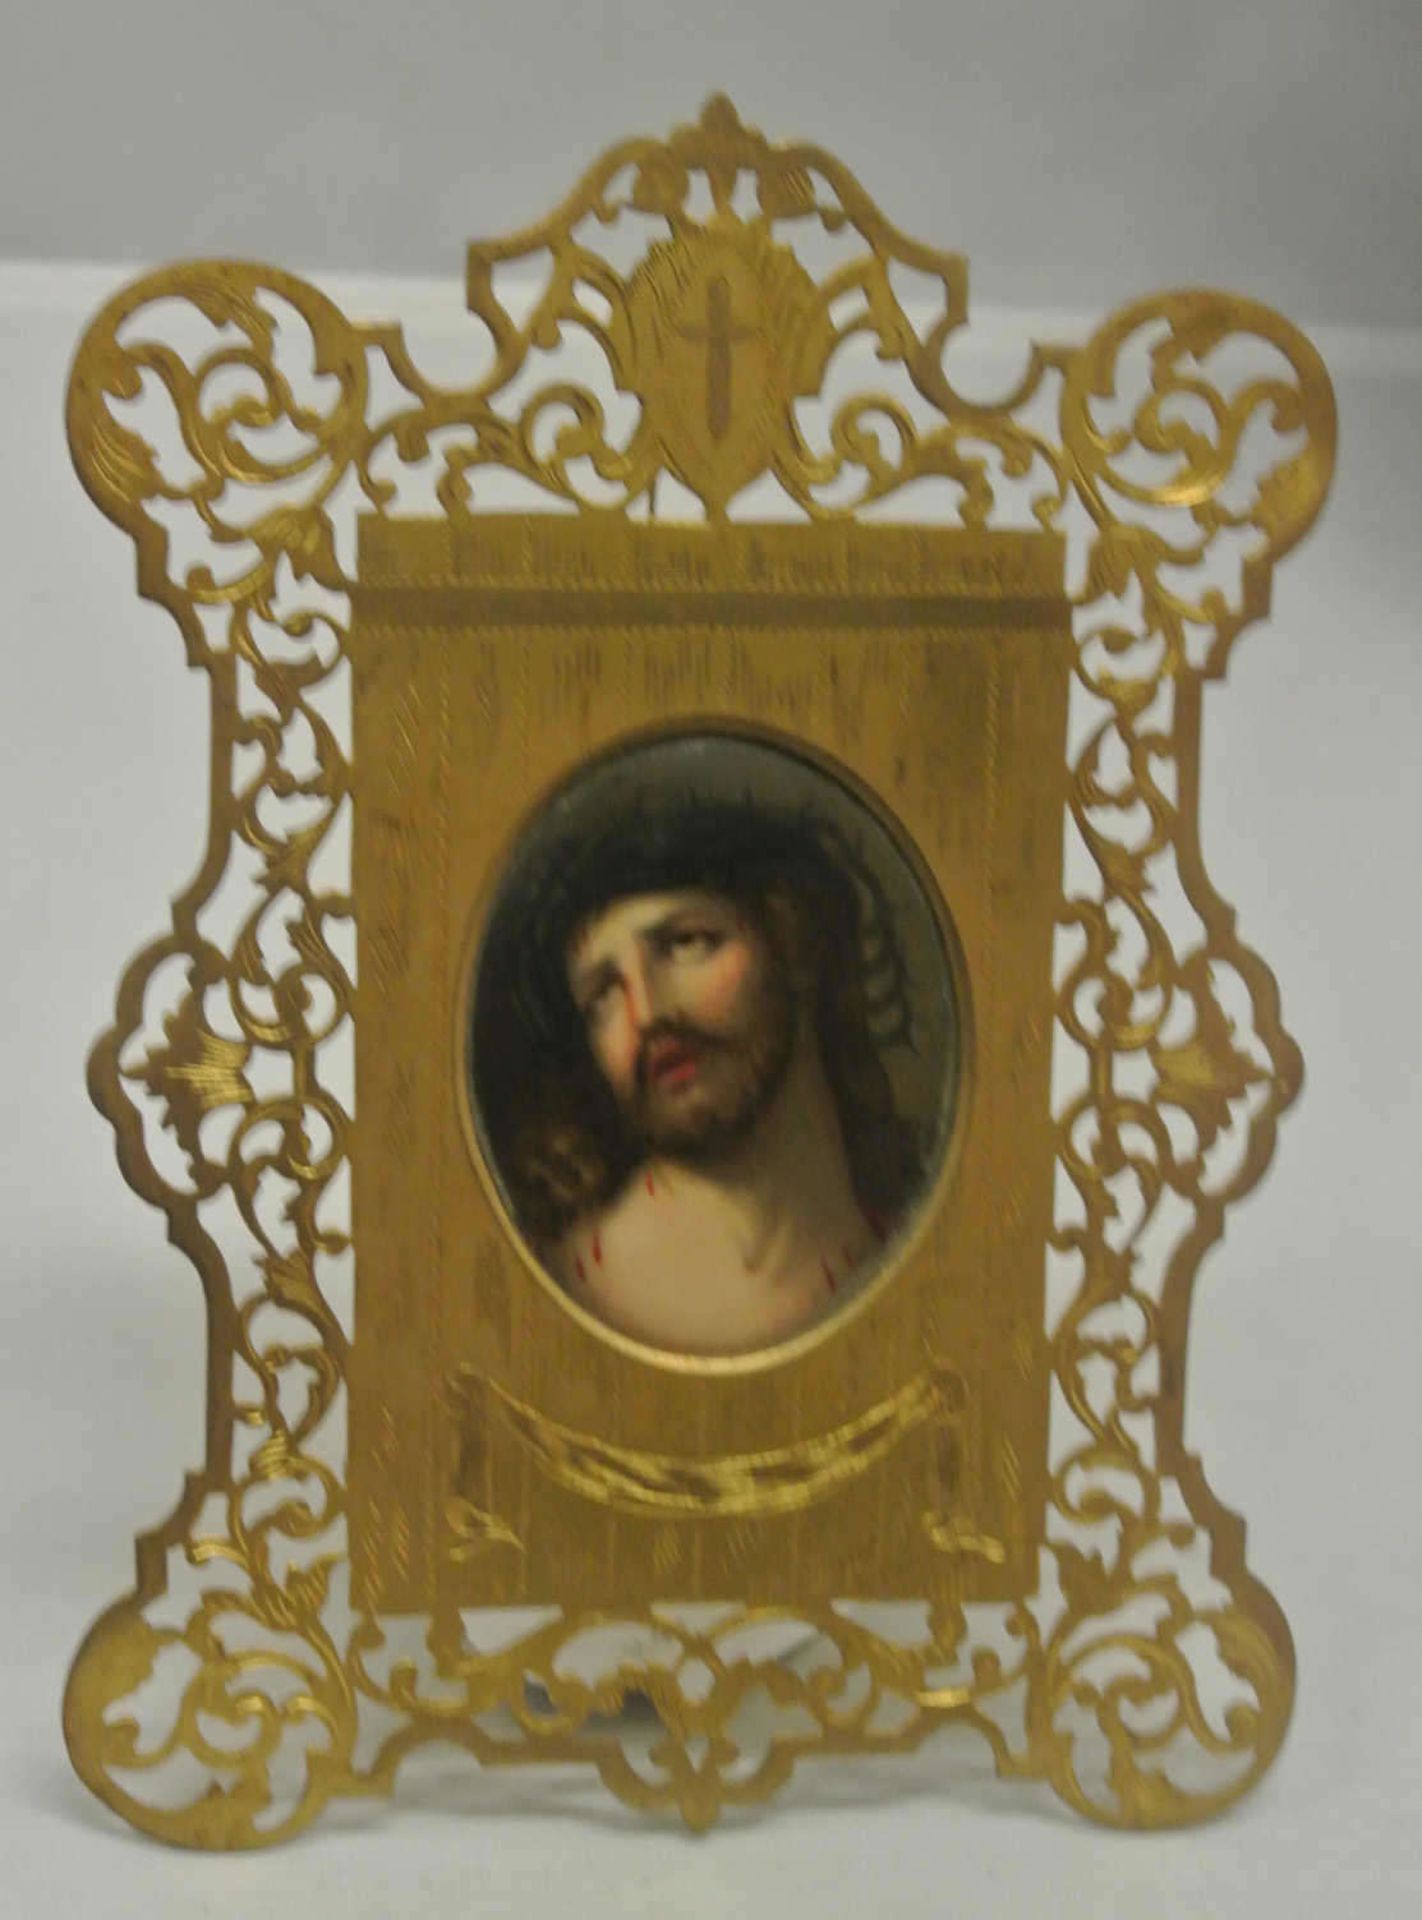 Porzellanbild "Jesus mit der Dornenkrone", feine Lupenmalerei im altem feinvergoldeteten Rahmen.